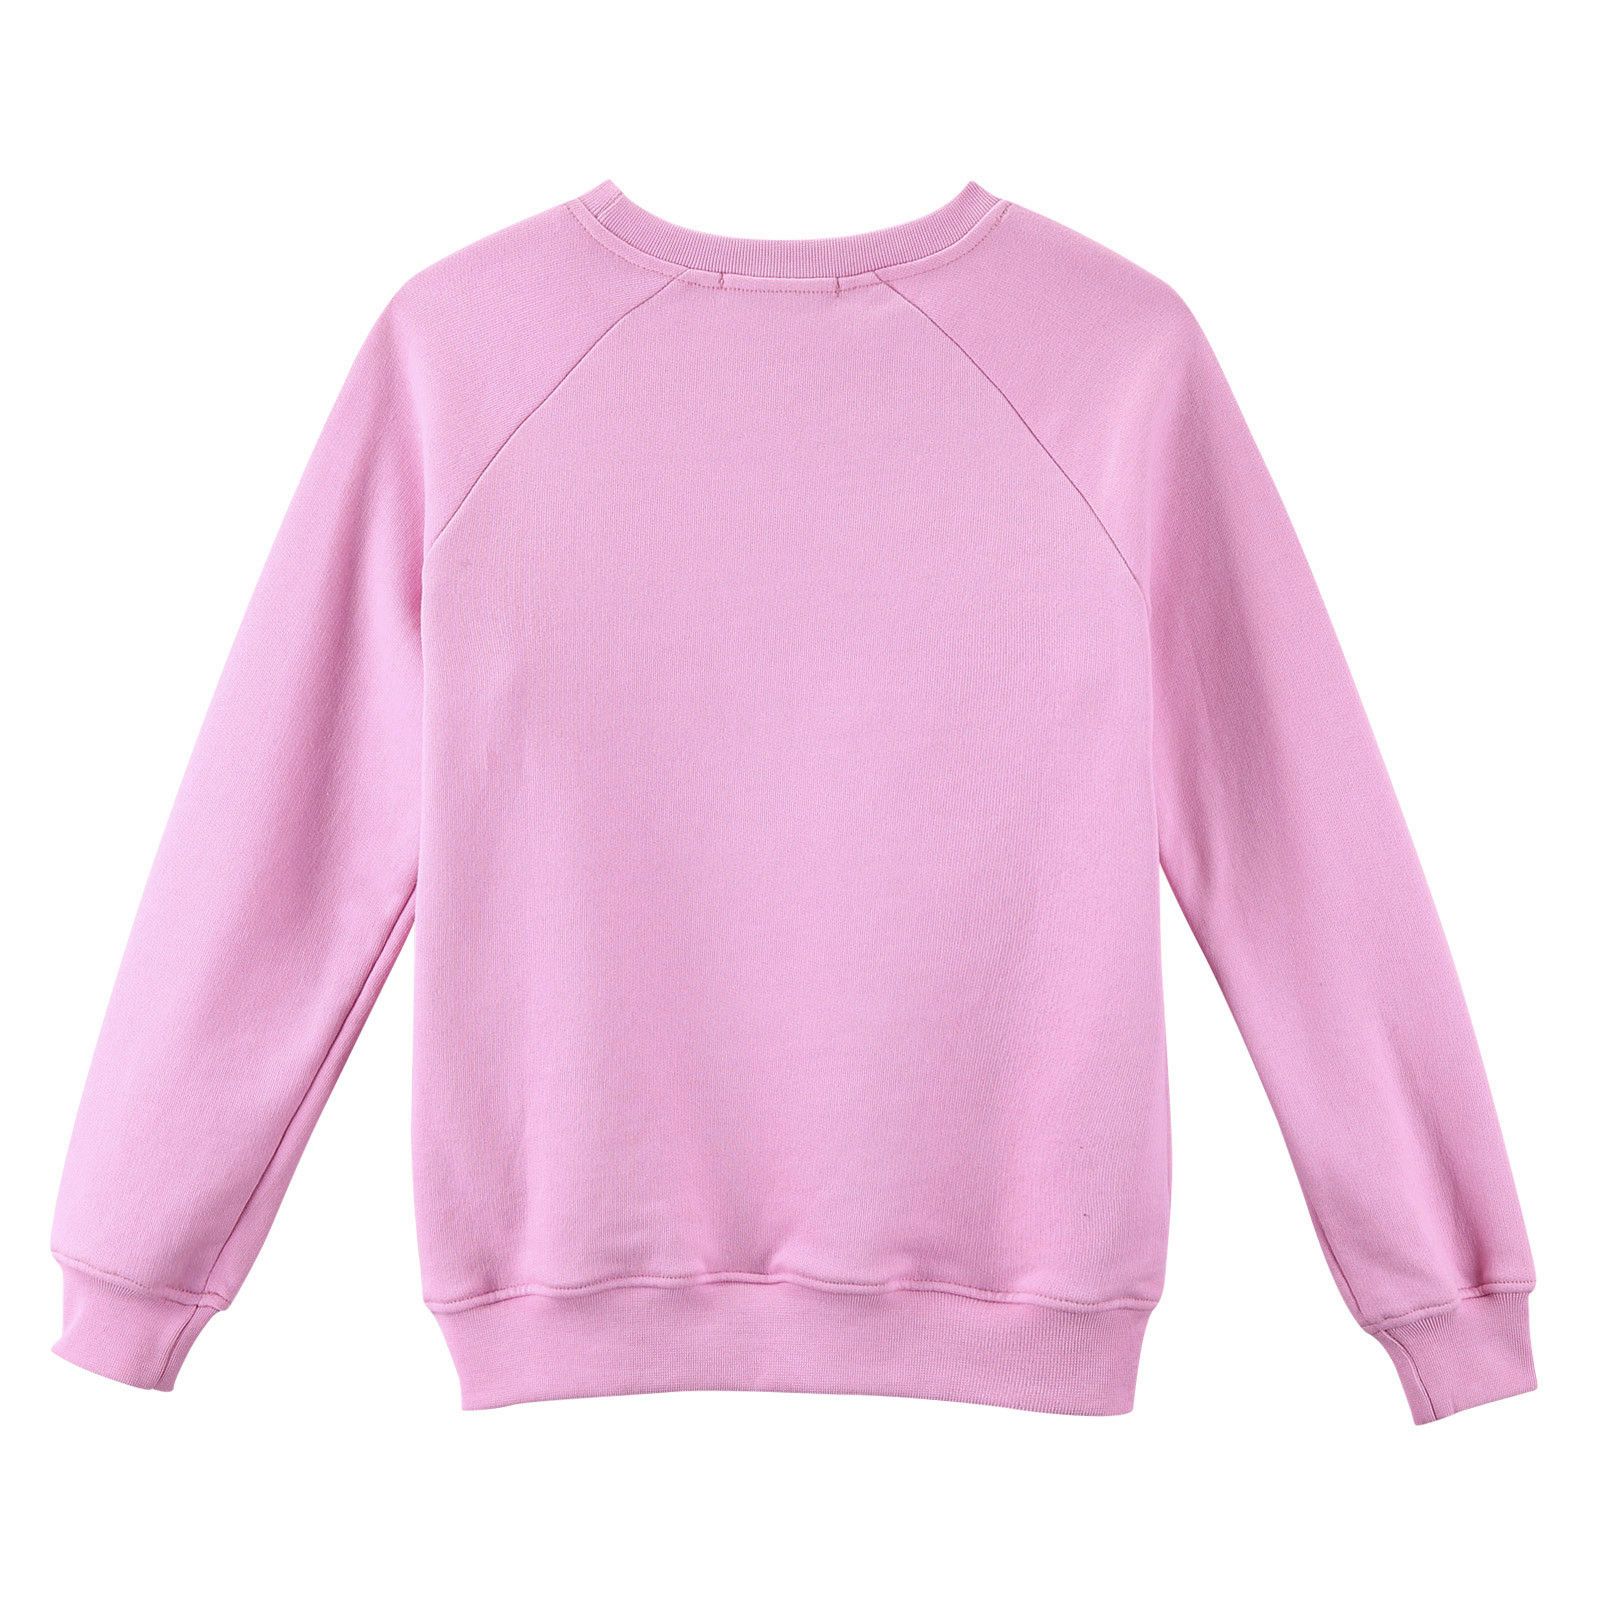 Girls Pink Cotton Sweatshirt With White Brand Logo - CÉMAROSE | Children's Fashion Store - 3